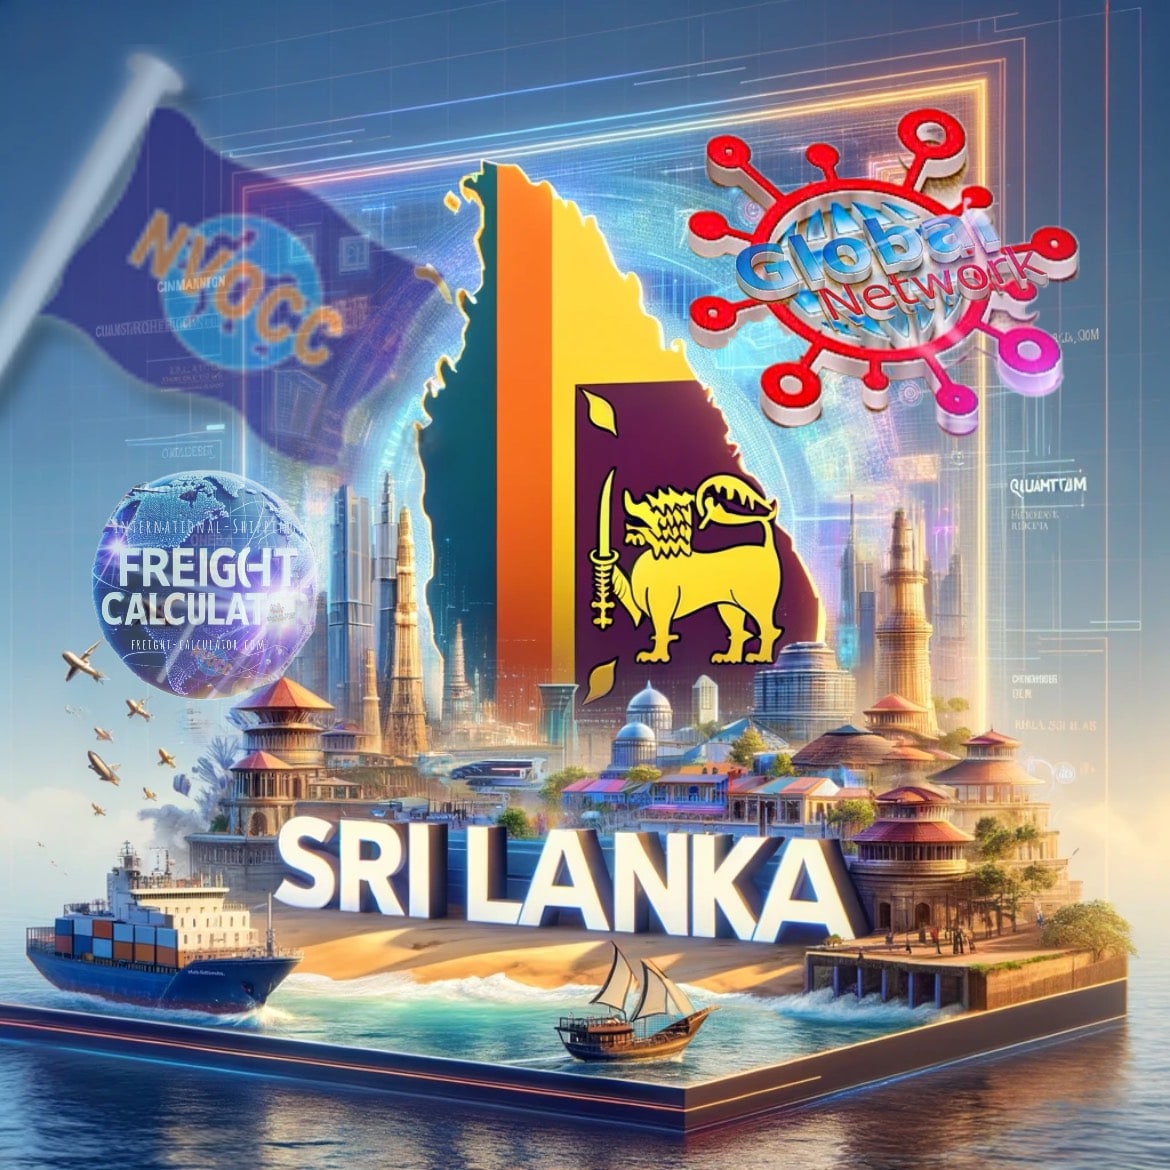 Shipping to Sri Lanka